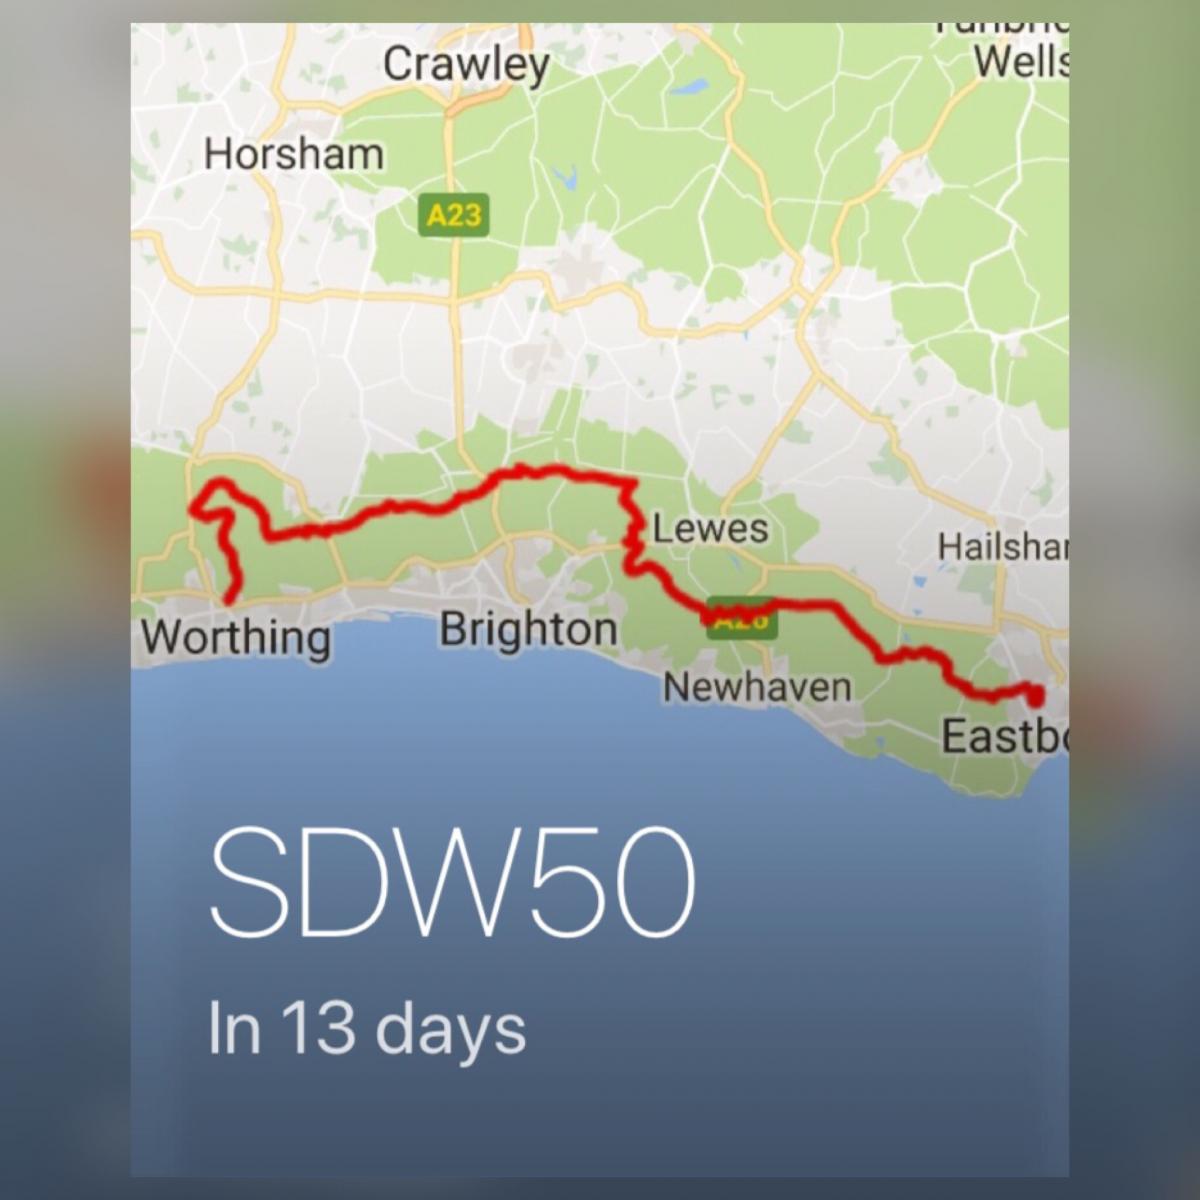 Image shows 13 days to SDW50